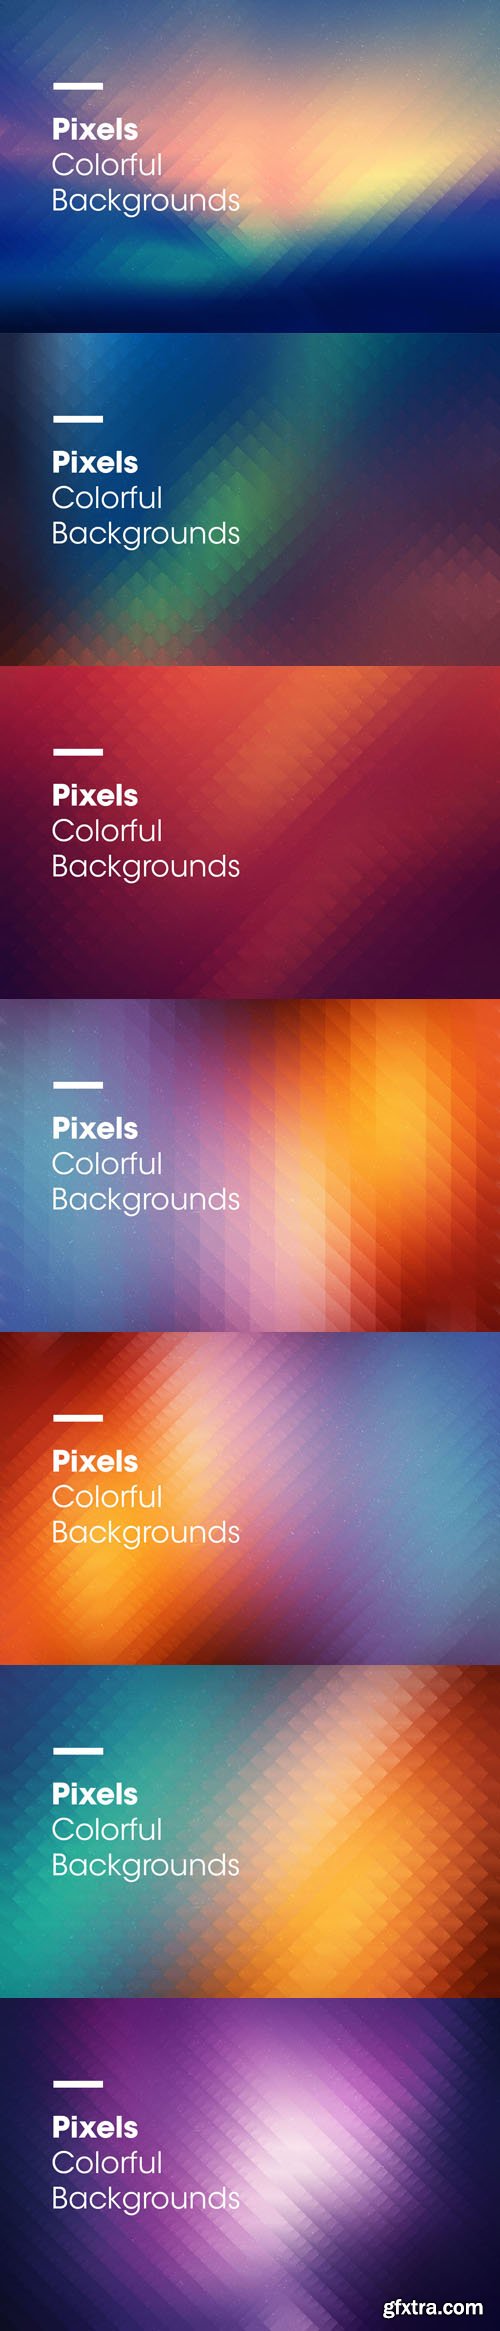 Pixels | Colorful Backgrounds